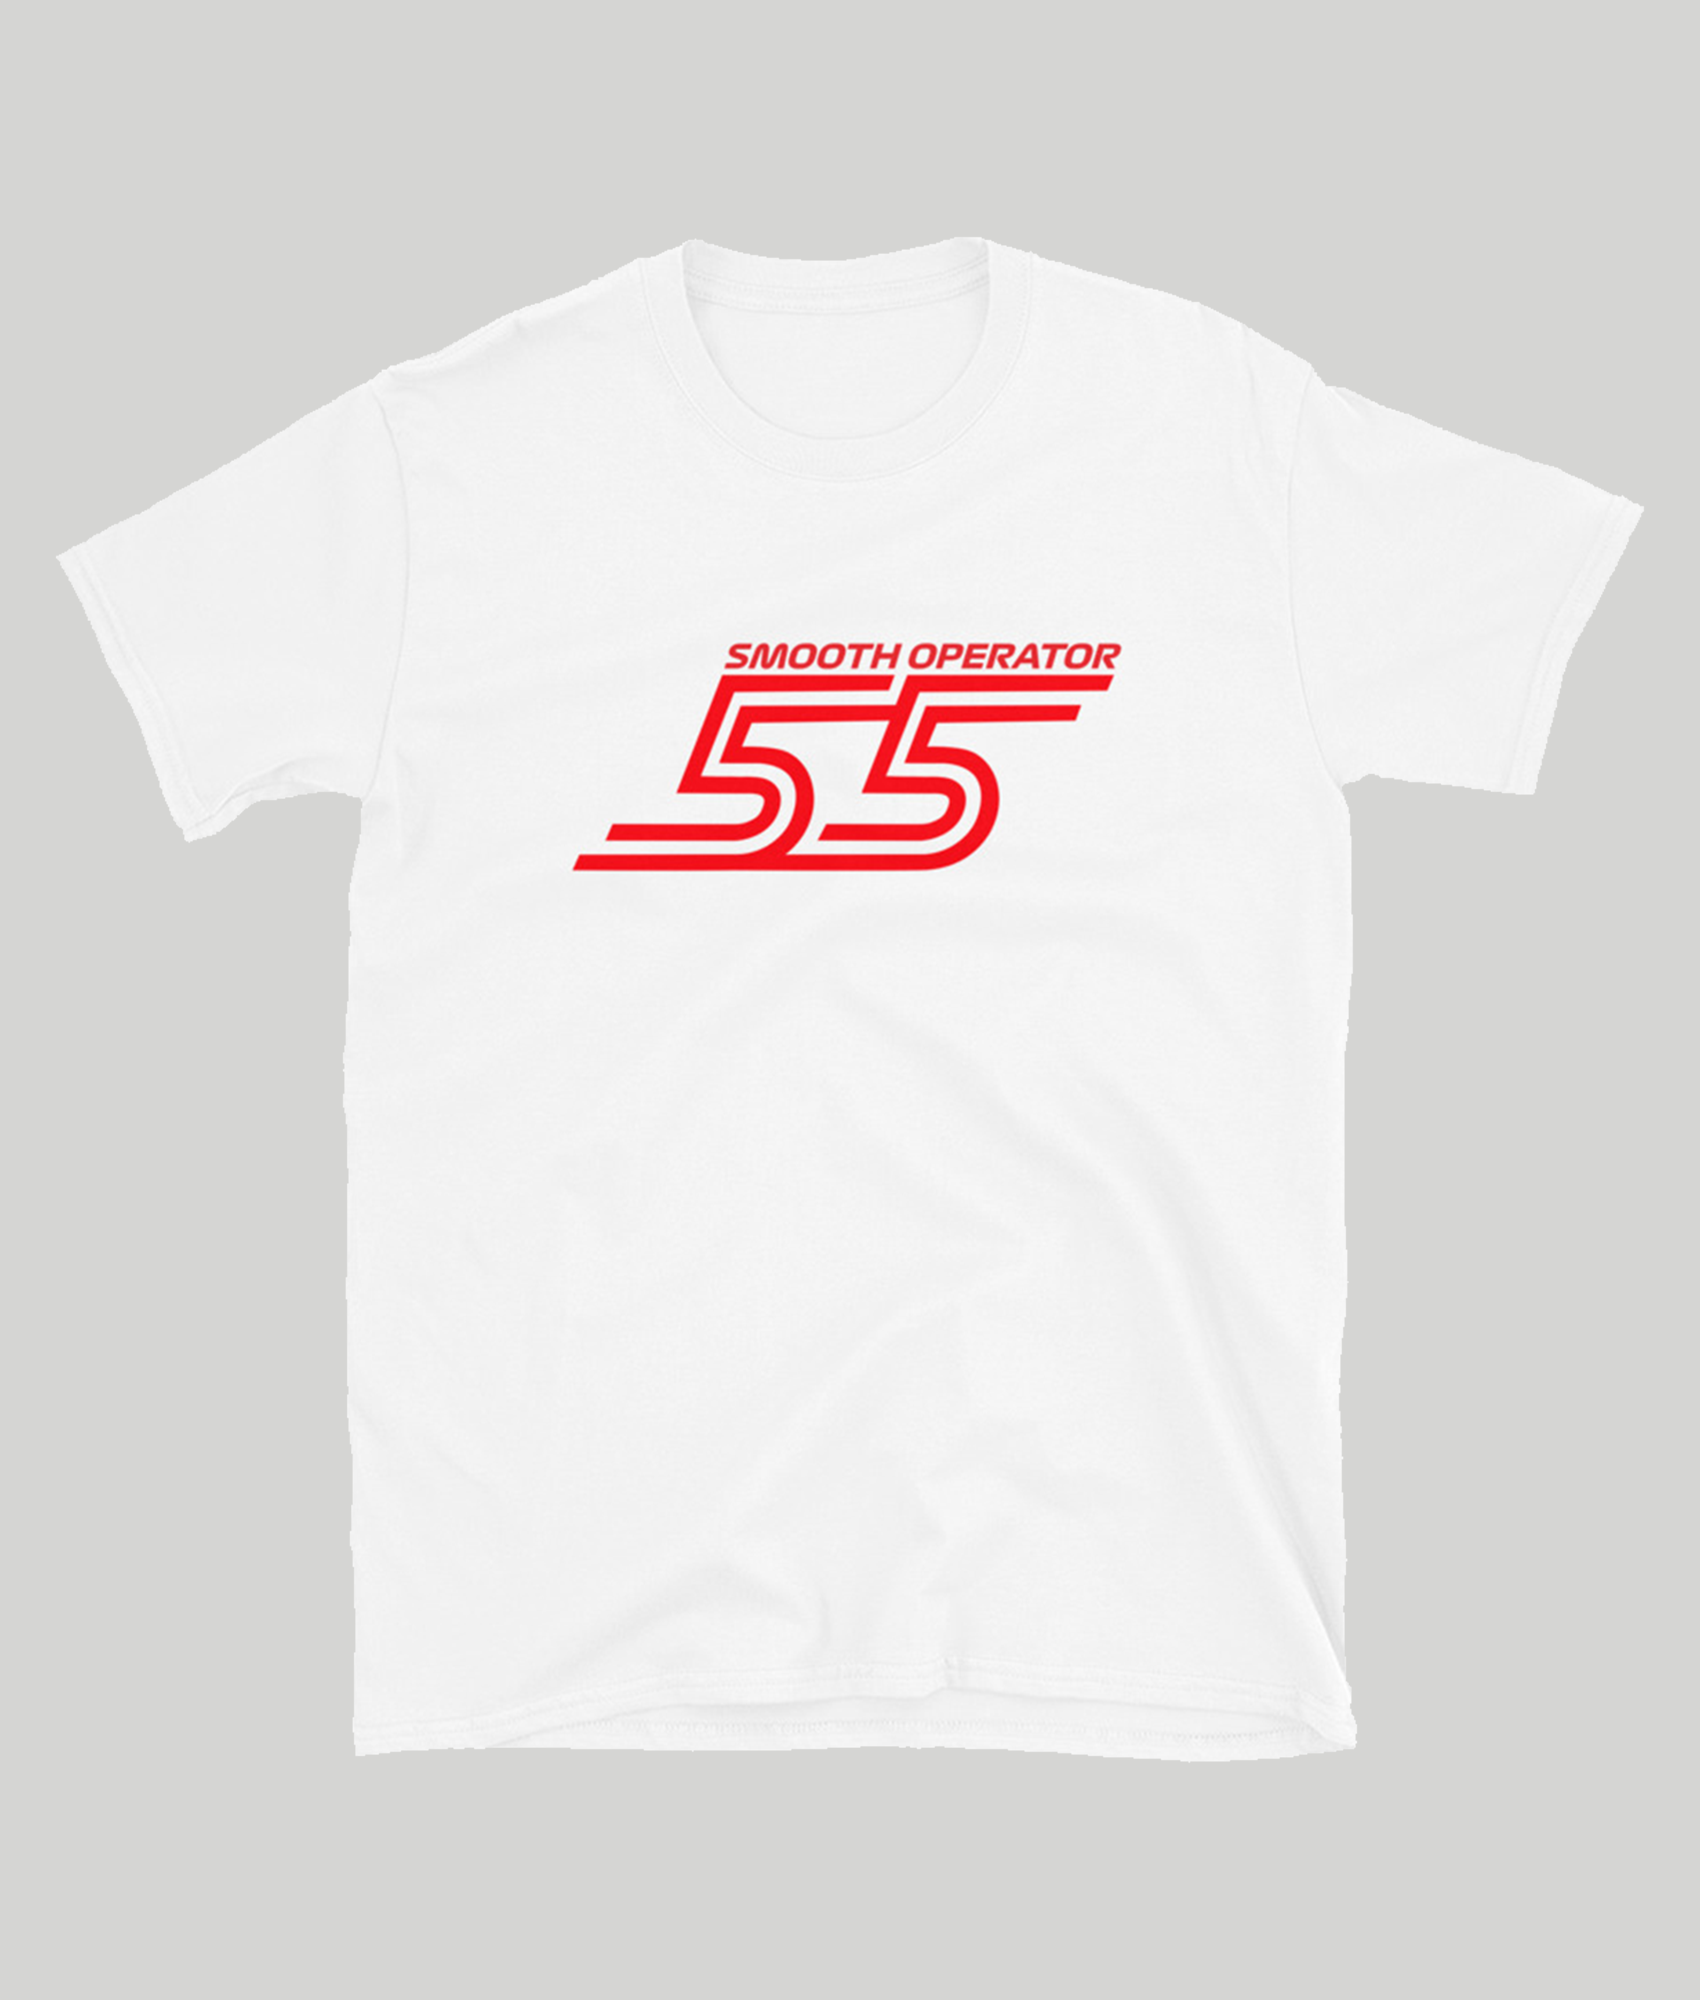 carlos sainz 55 smooth operator white t-shirt